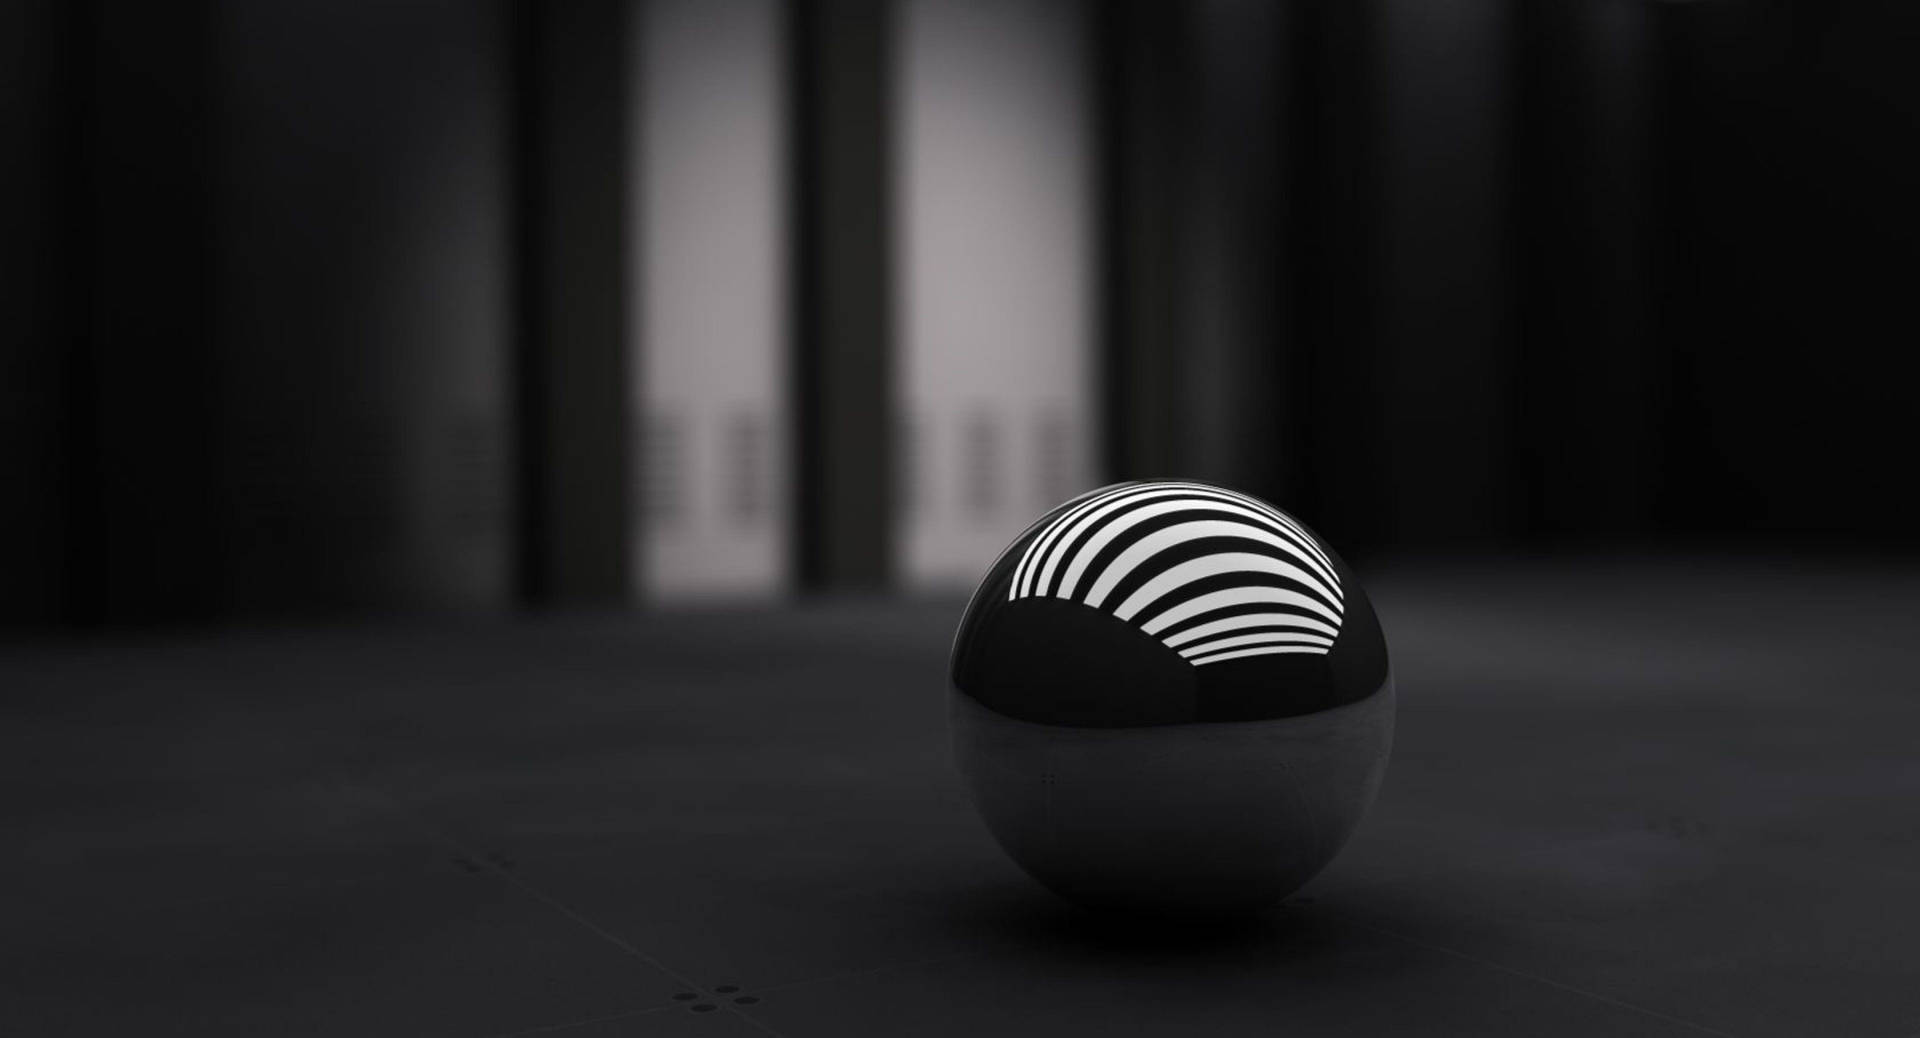 4k Ultra Hd Black And White Ball Background